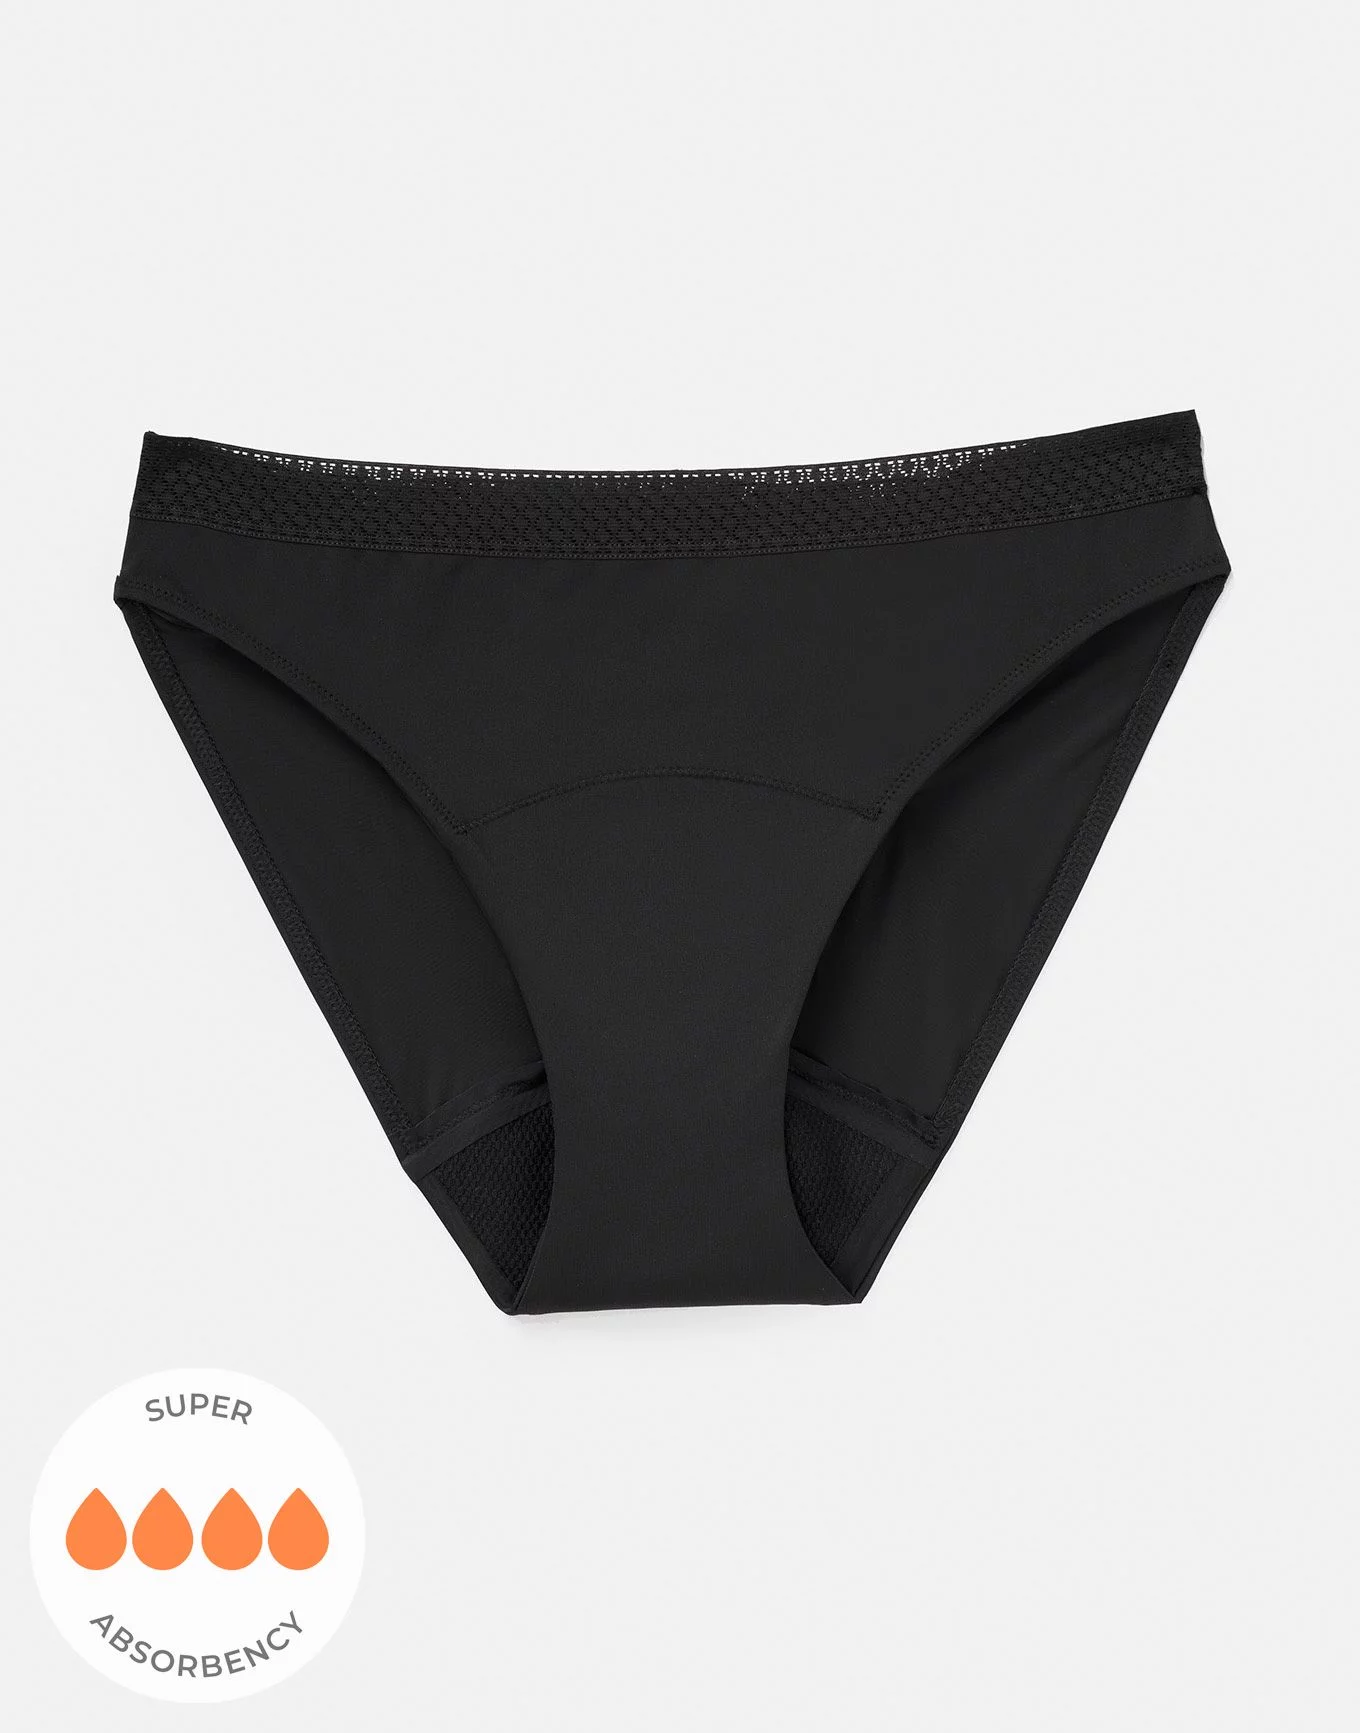 Katelin Bikini Black Period Panties, XS-XL